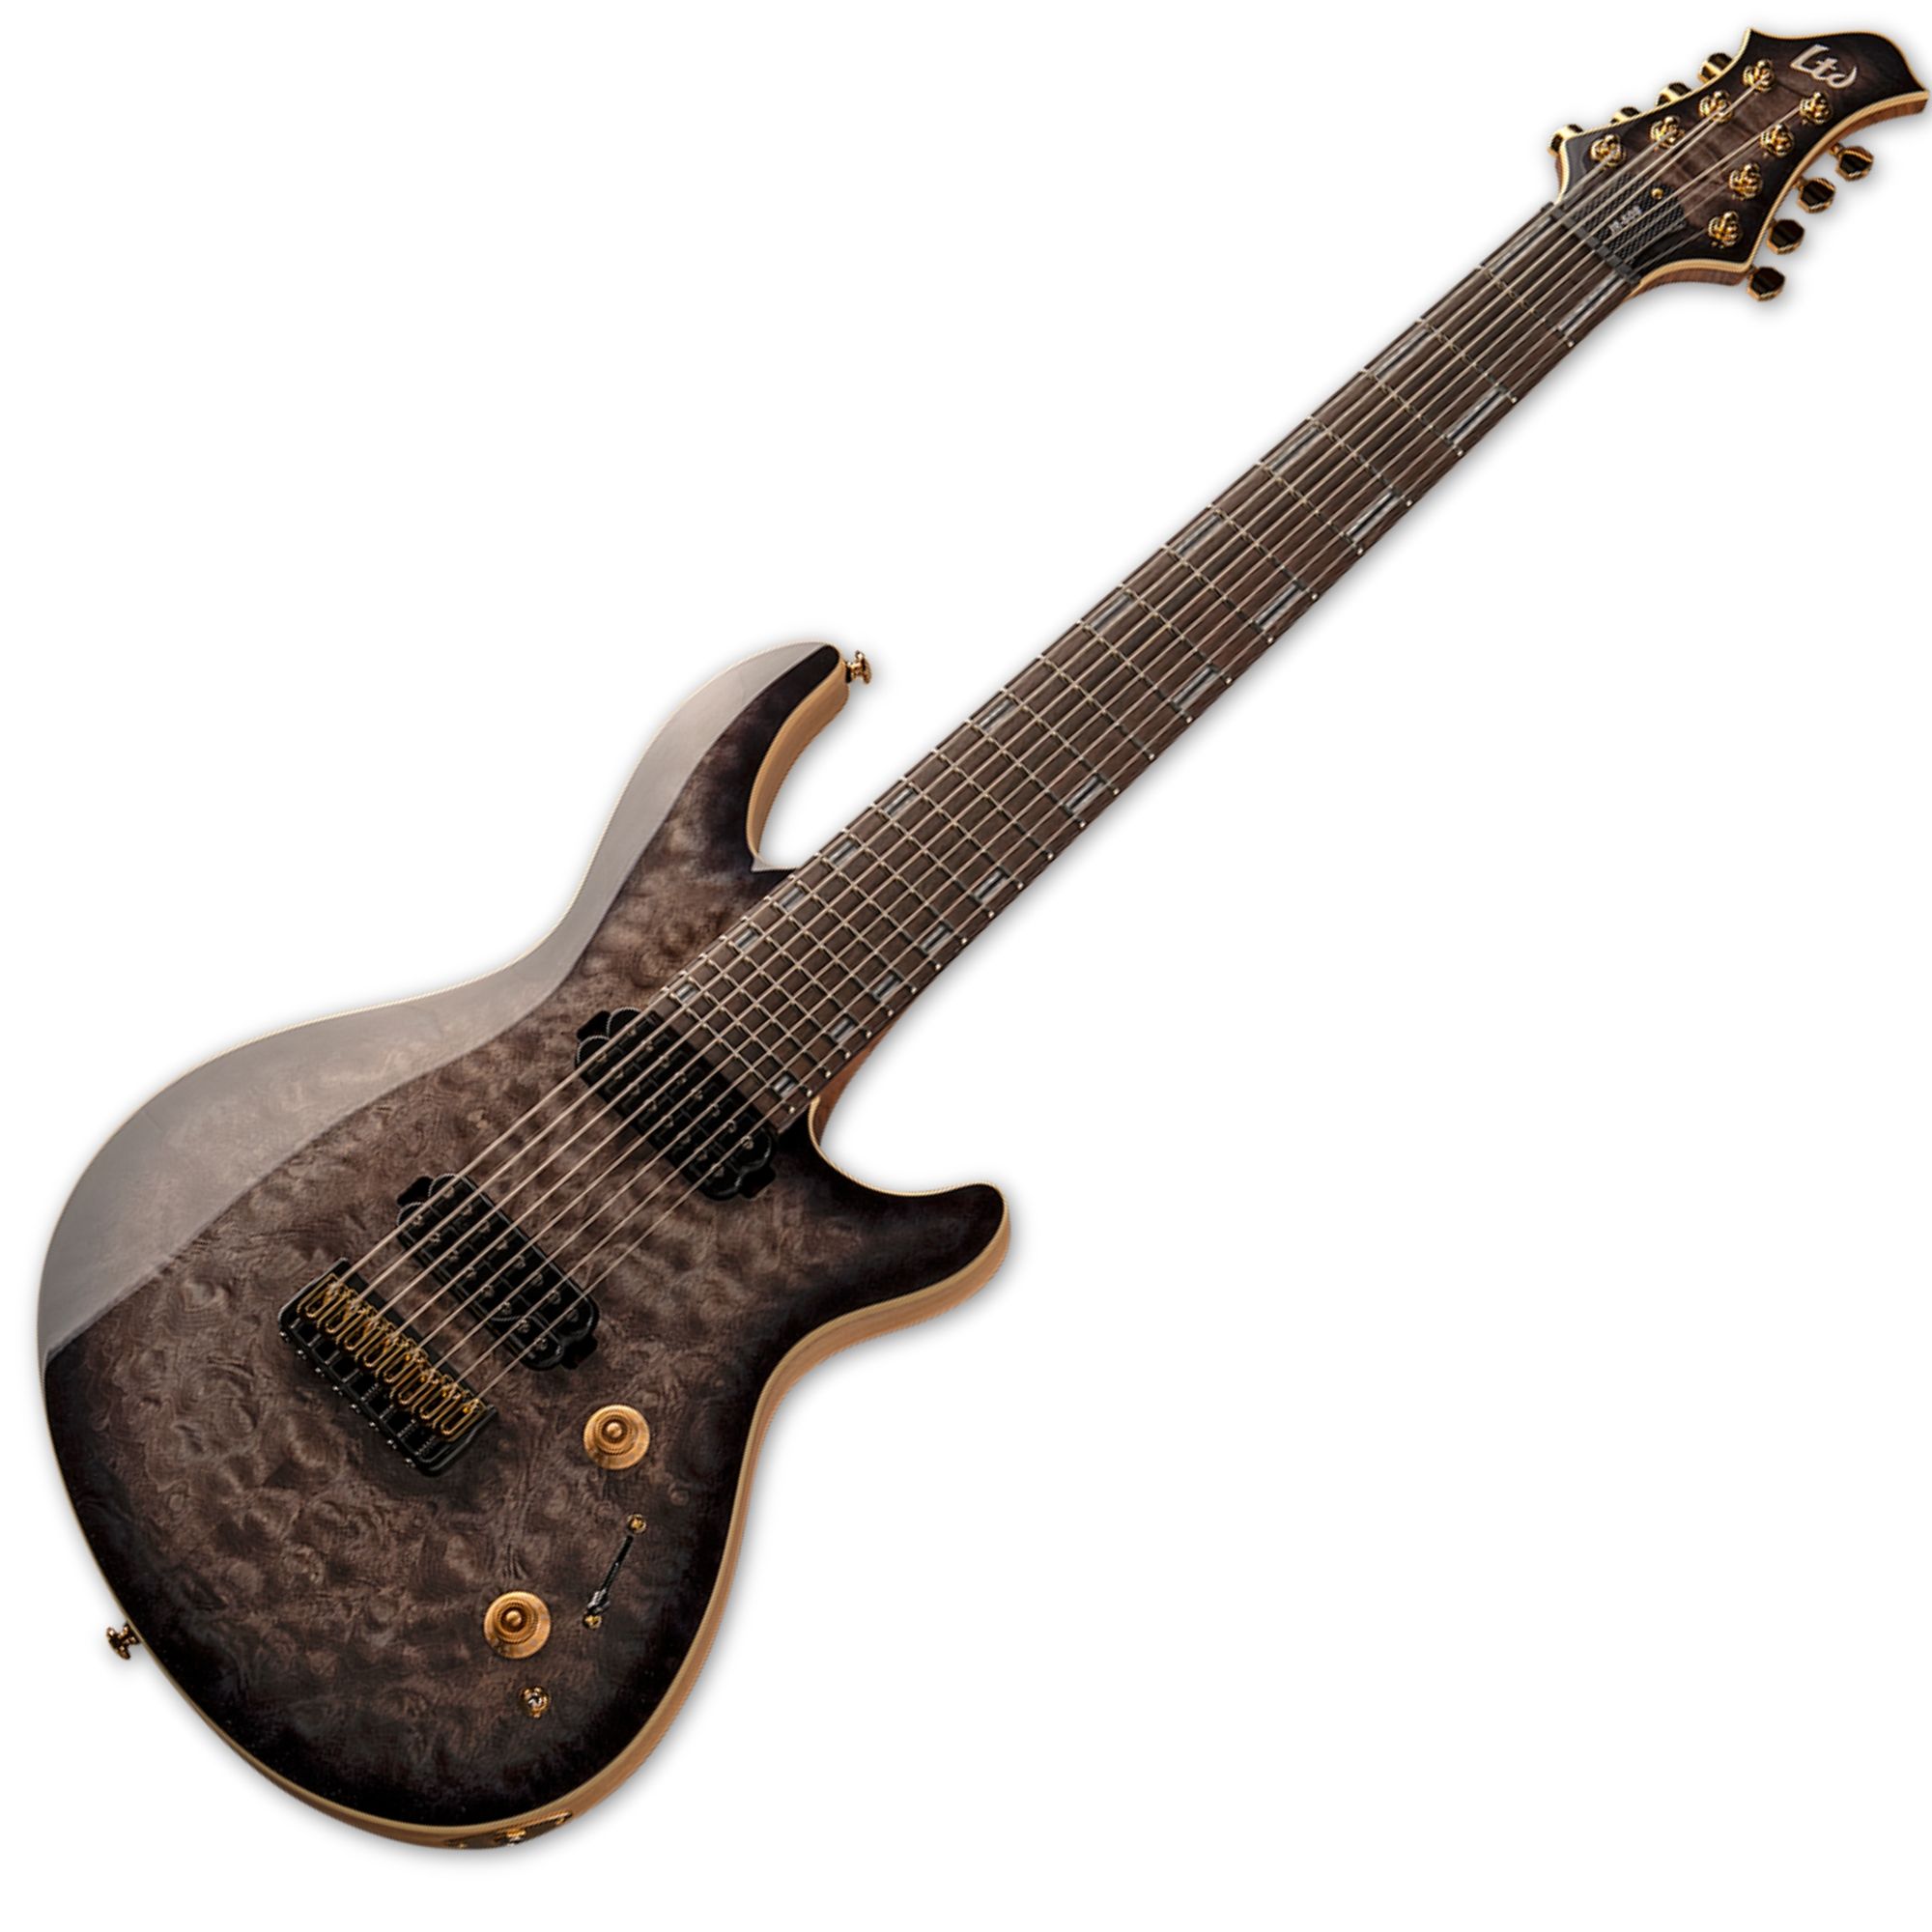 Buy ESP JR608 Electric Guitar online in India